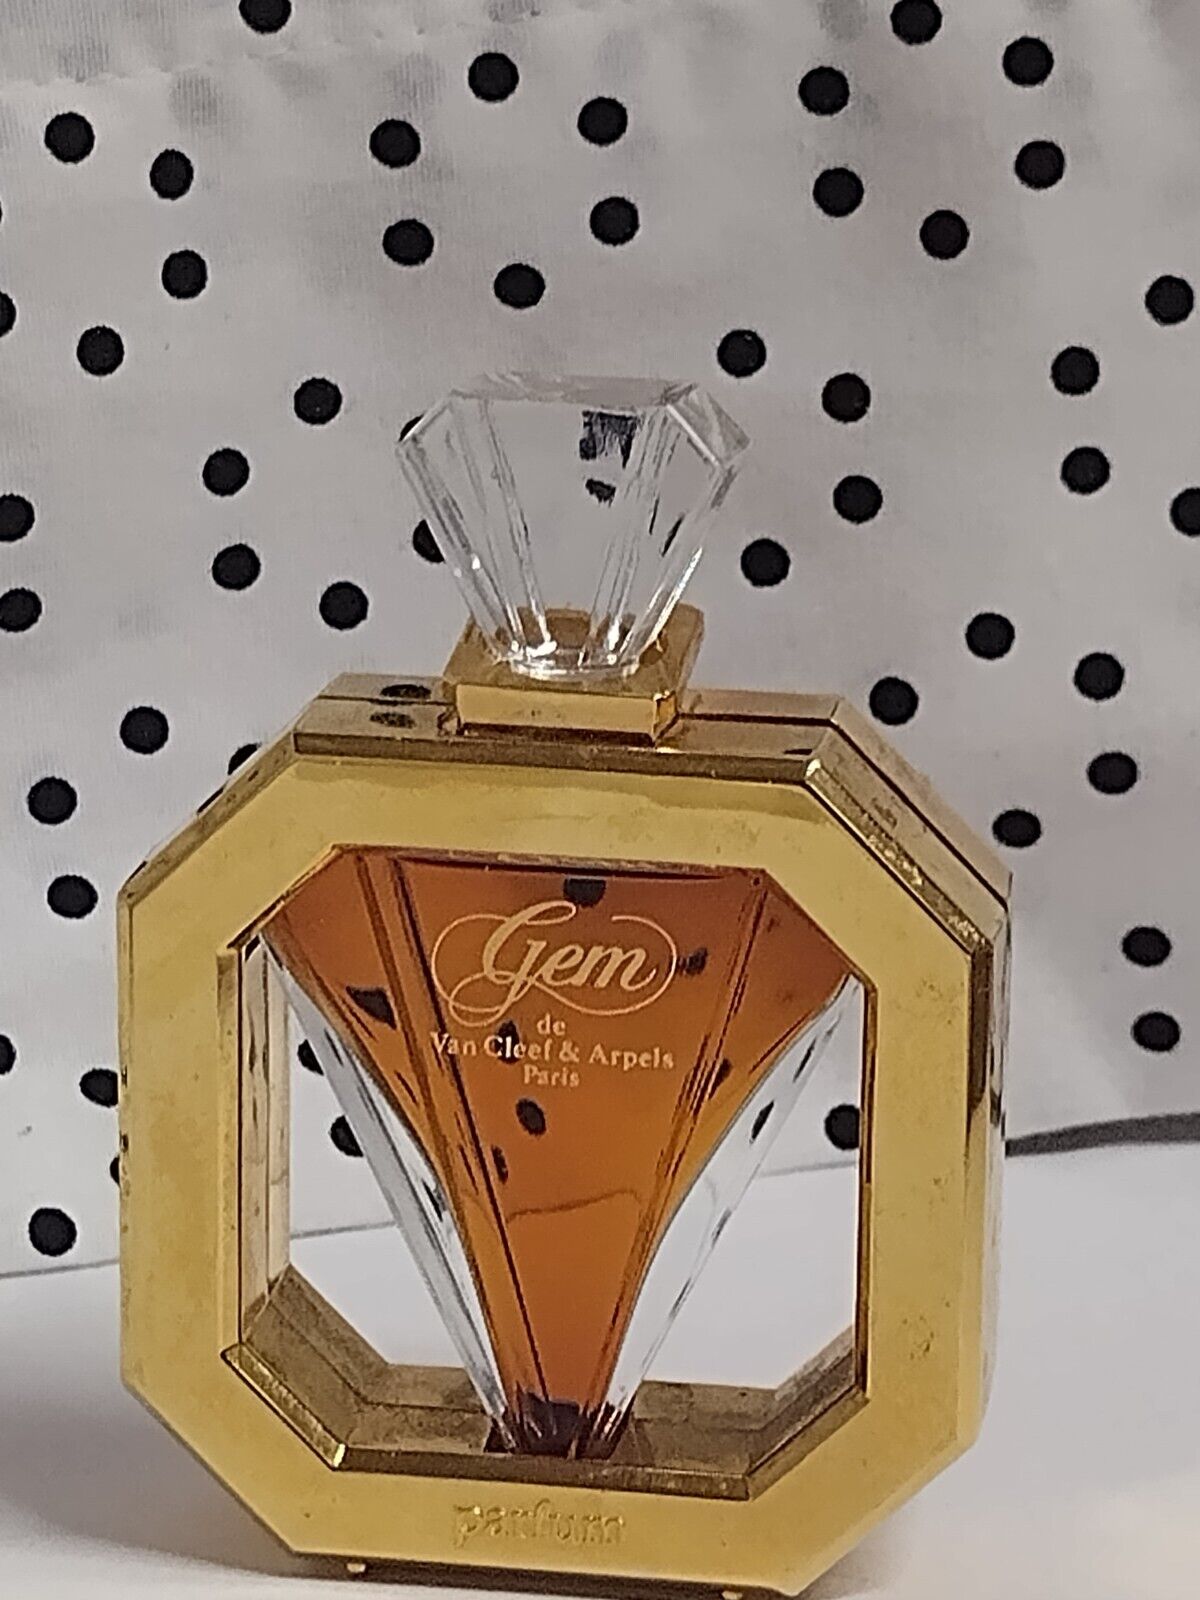 GEM VAN CLEEF & ARPELS EXTRAIT PARFUM 7 ml 0.24 fl oz new Perfume.Aa